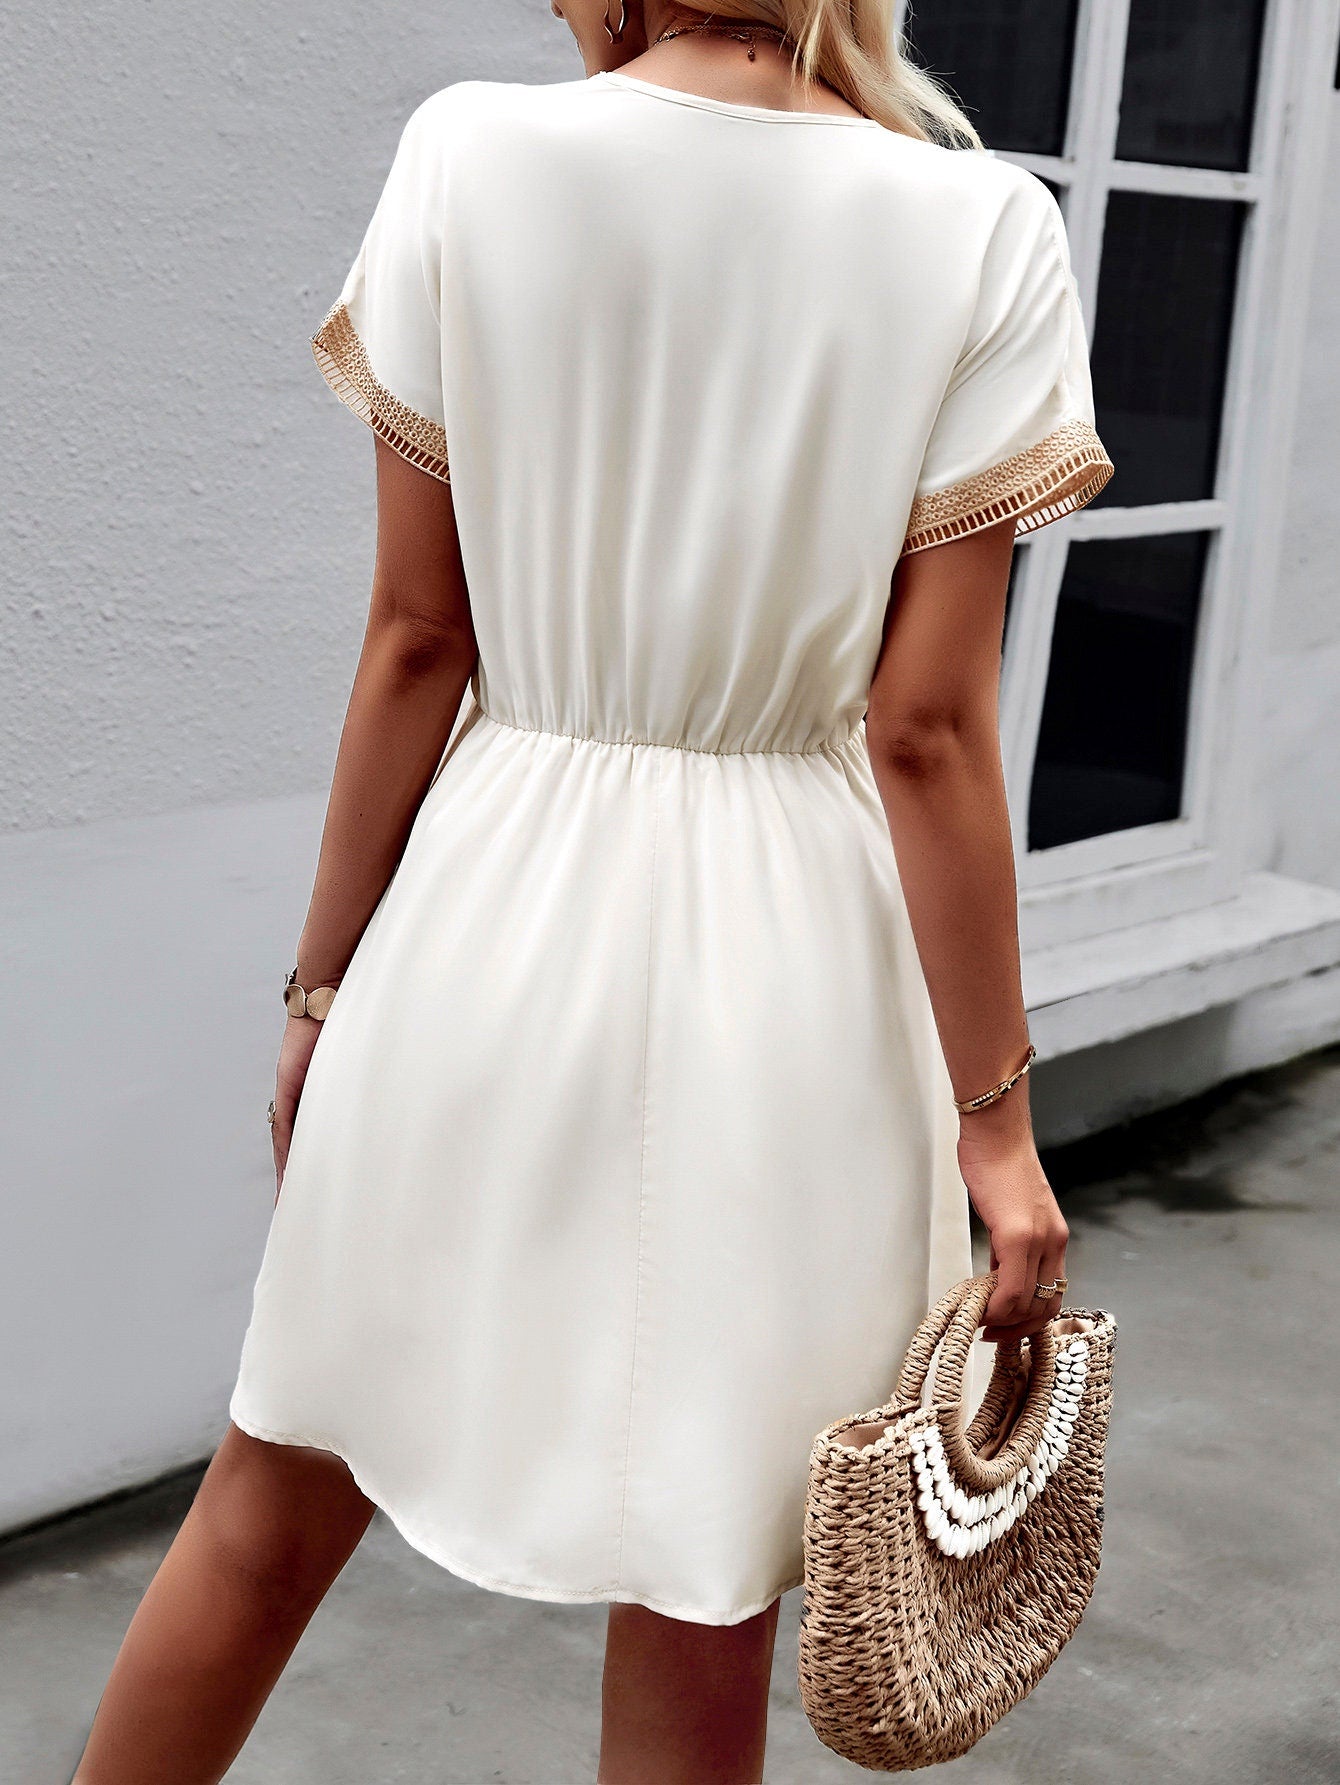 Sunny Day Short Sleeve Mini Dress ,  White Mini Dress -  Spring Dress , Cocktail Dress / Wedding Party Dress